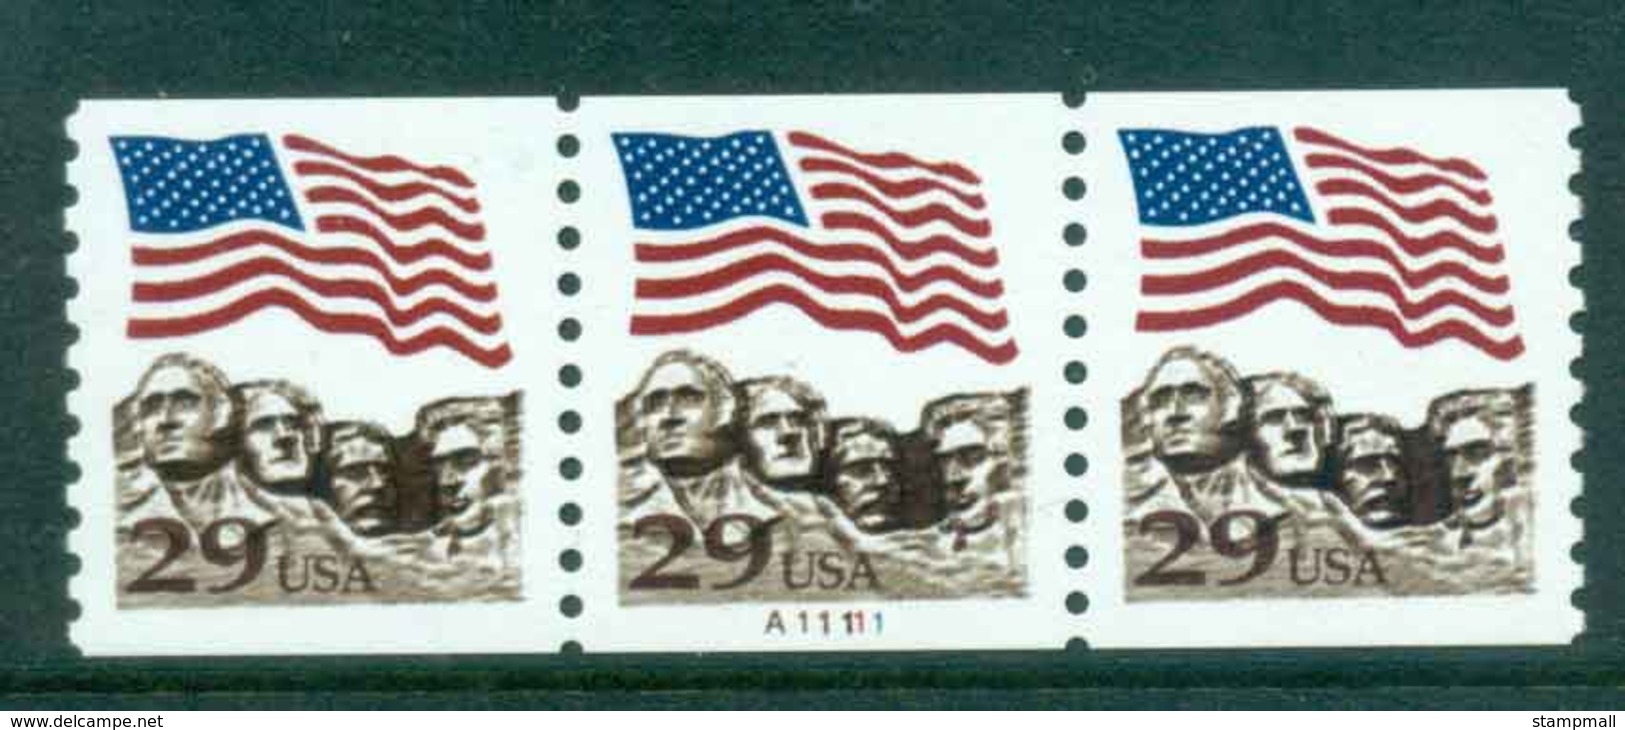 USA 1991 Sc#2523A 29c Flag Over Mt Rushmore Photogravure Coil P#A11111 Str 3 MUH Lot47516 - Rollenmarken (Plattennummern)